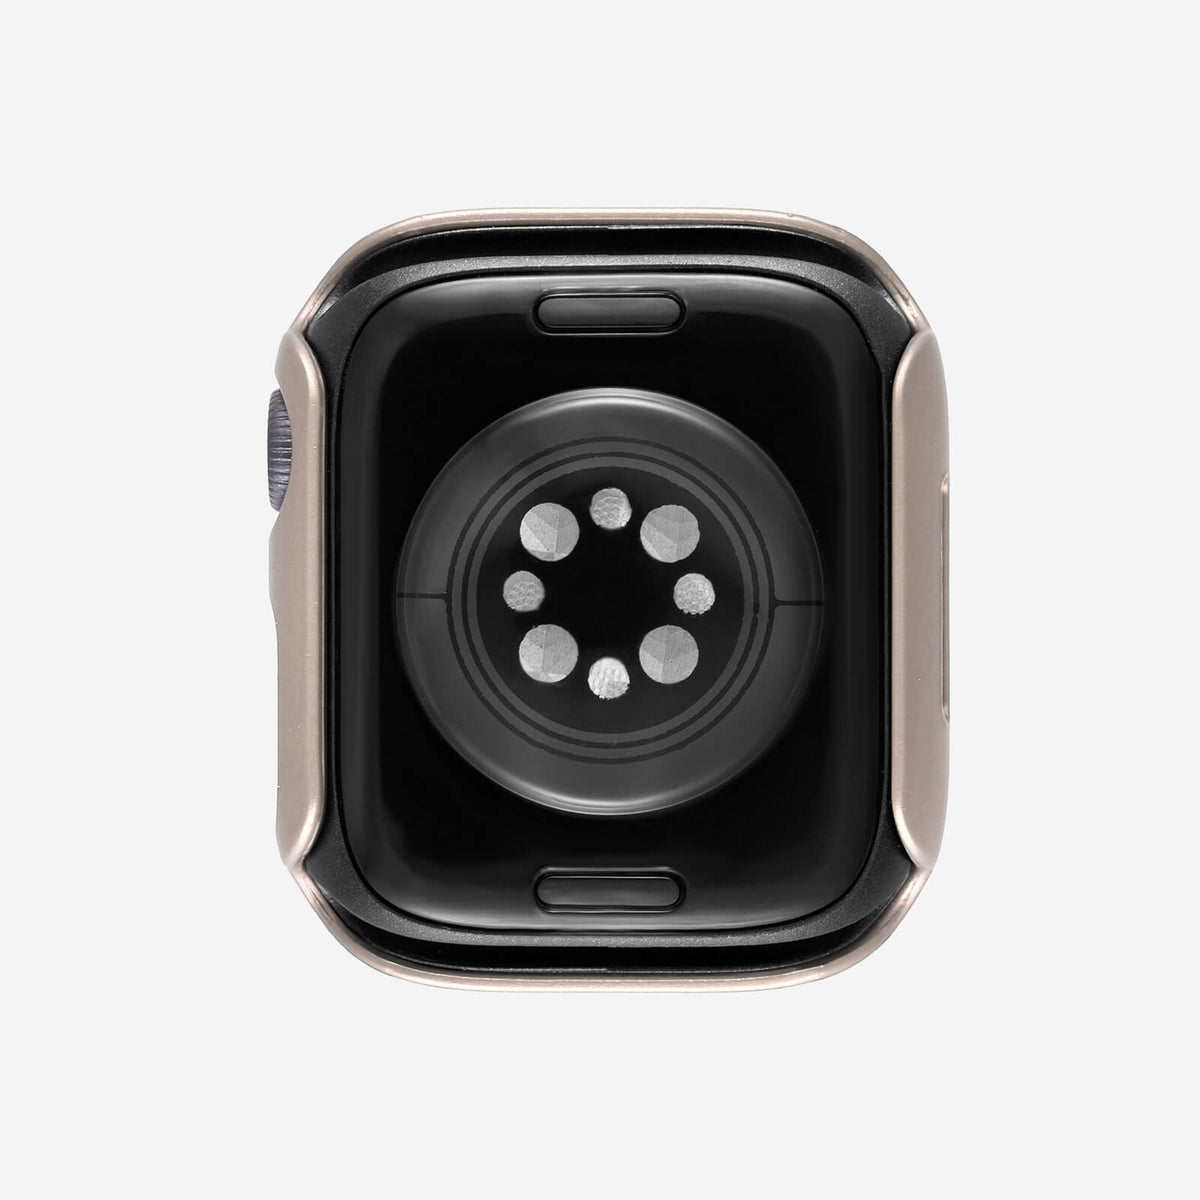 Apple Watch Slim Screen Protector Case - Starlight